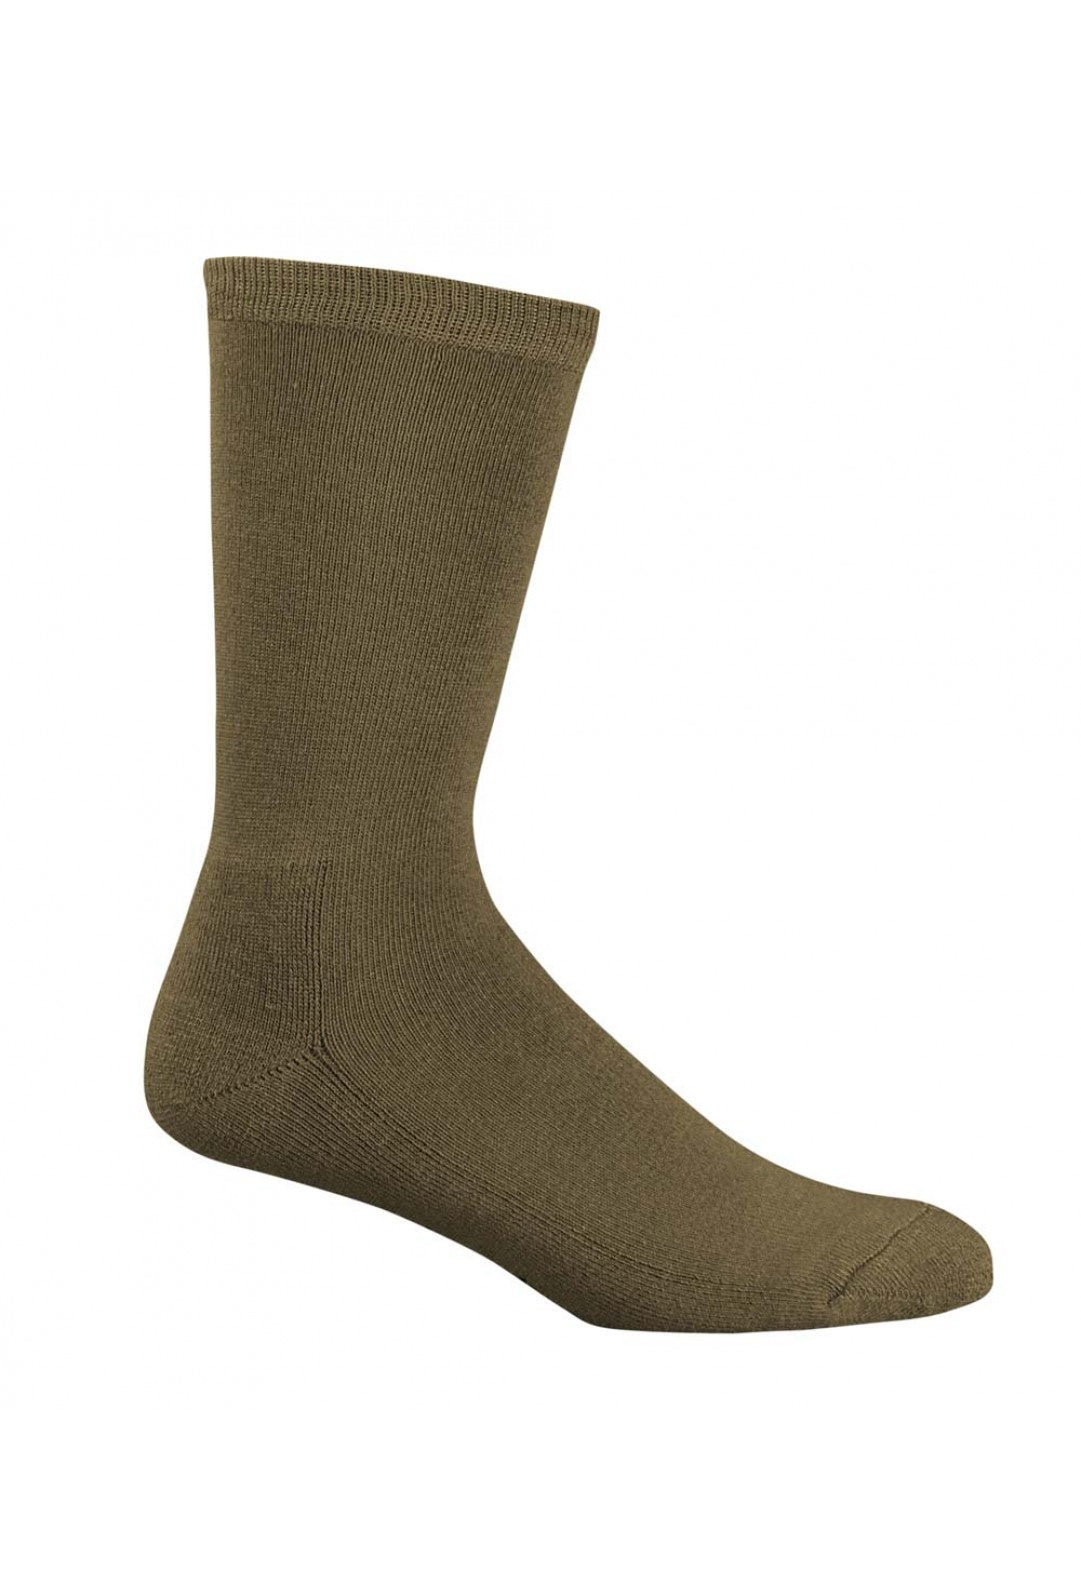 Bamboo Comfort sock-Walnut